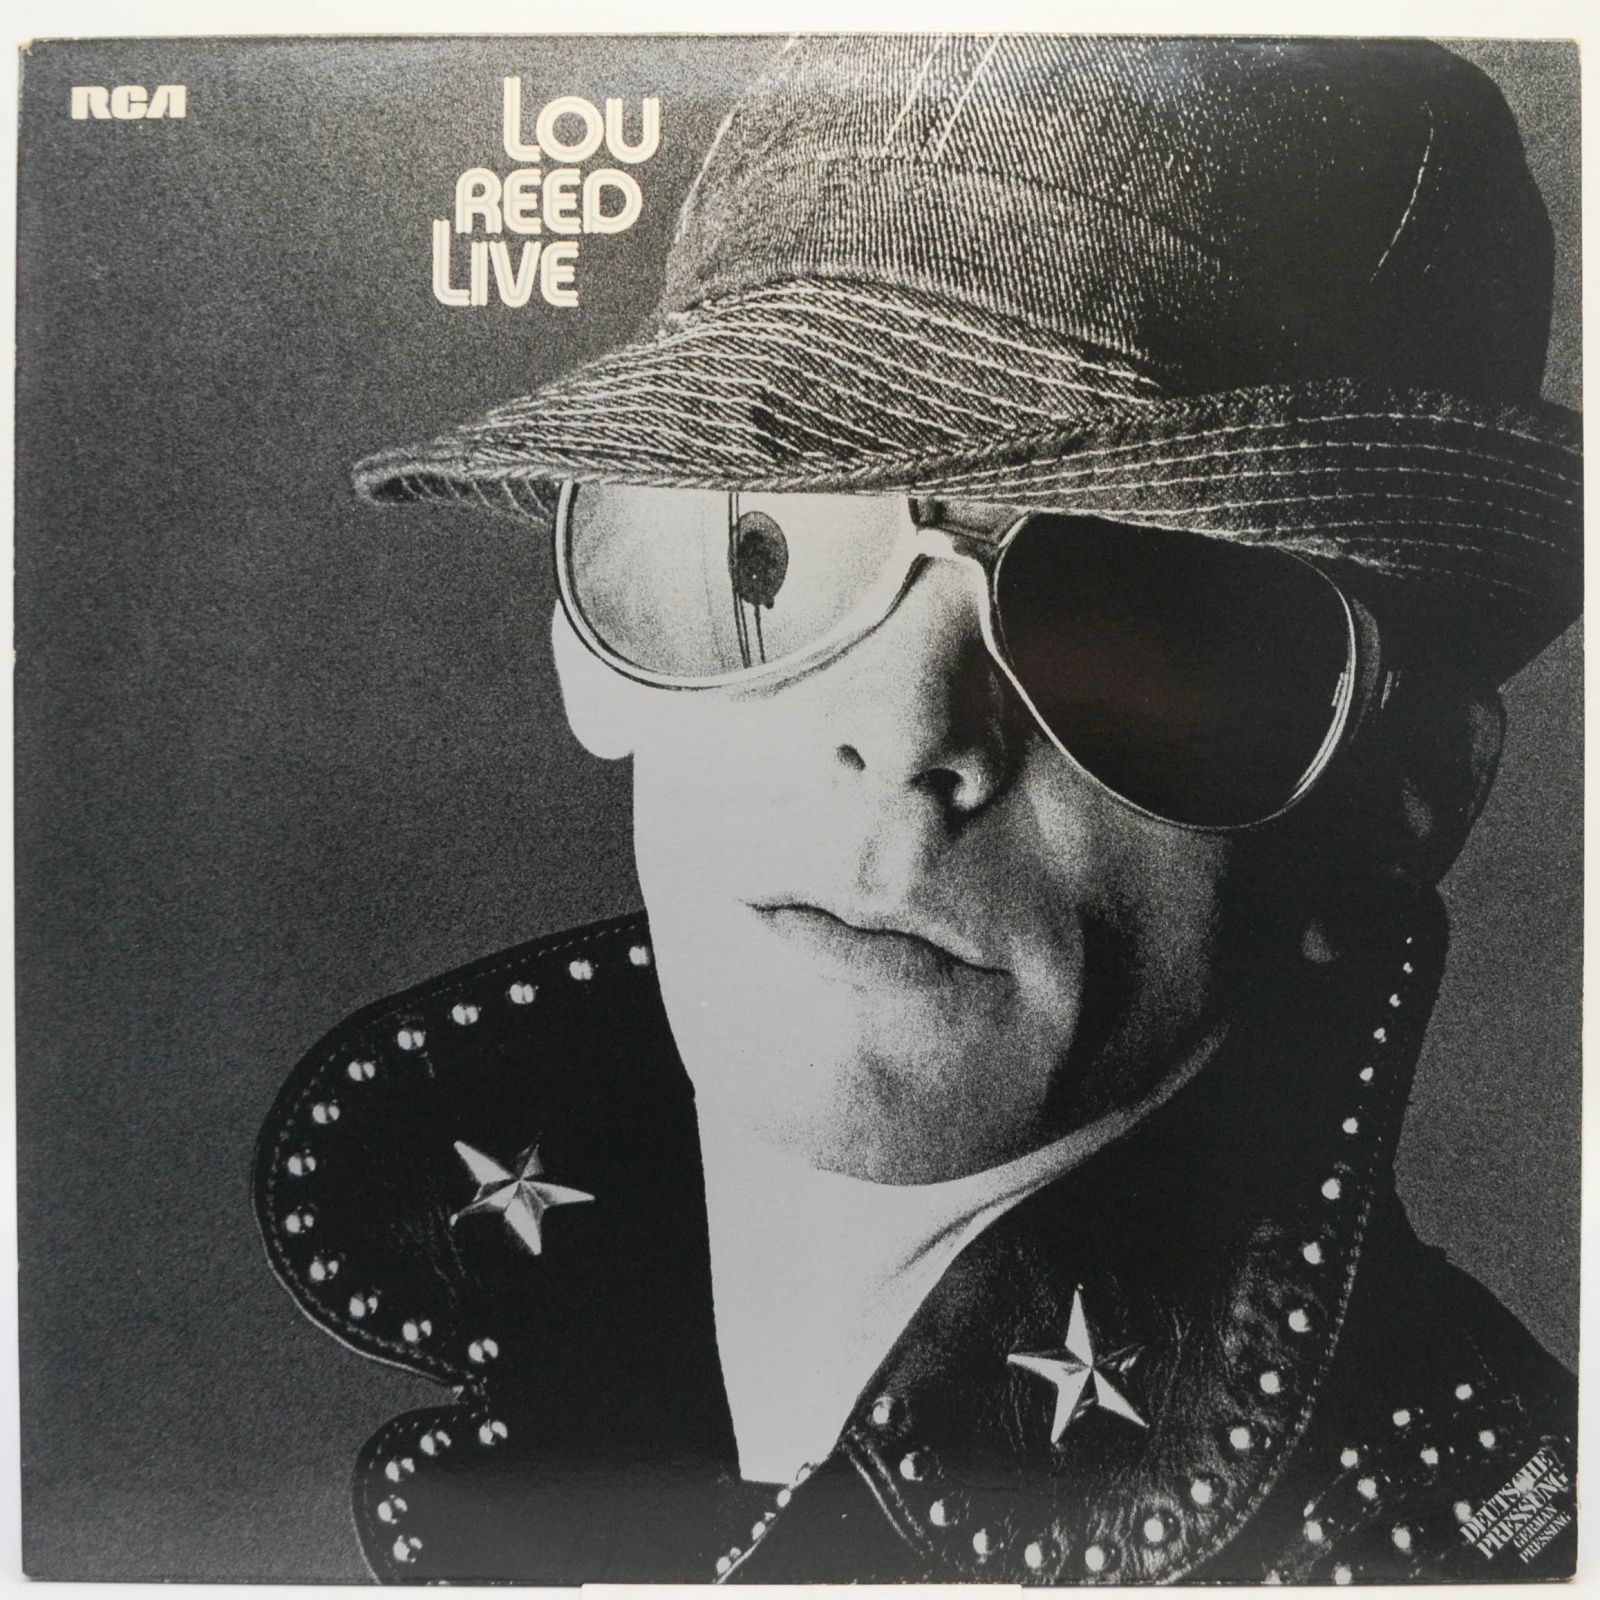 Lou Reed Live, 1981